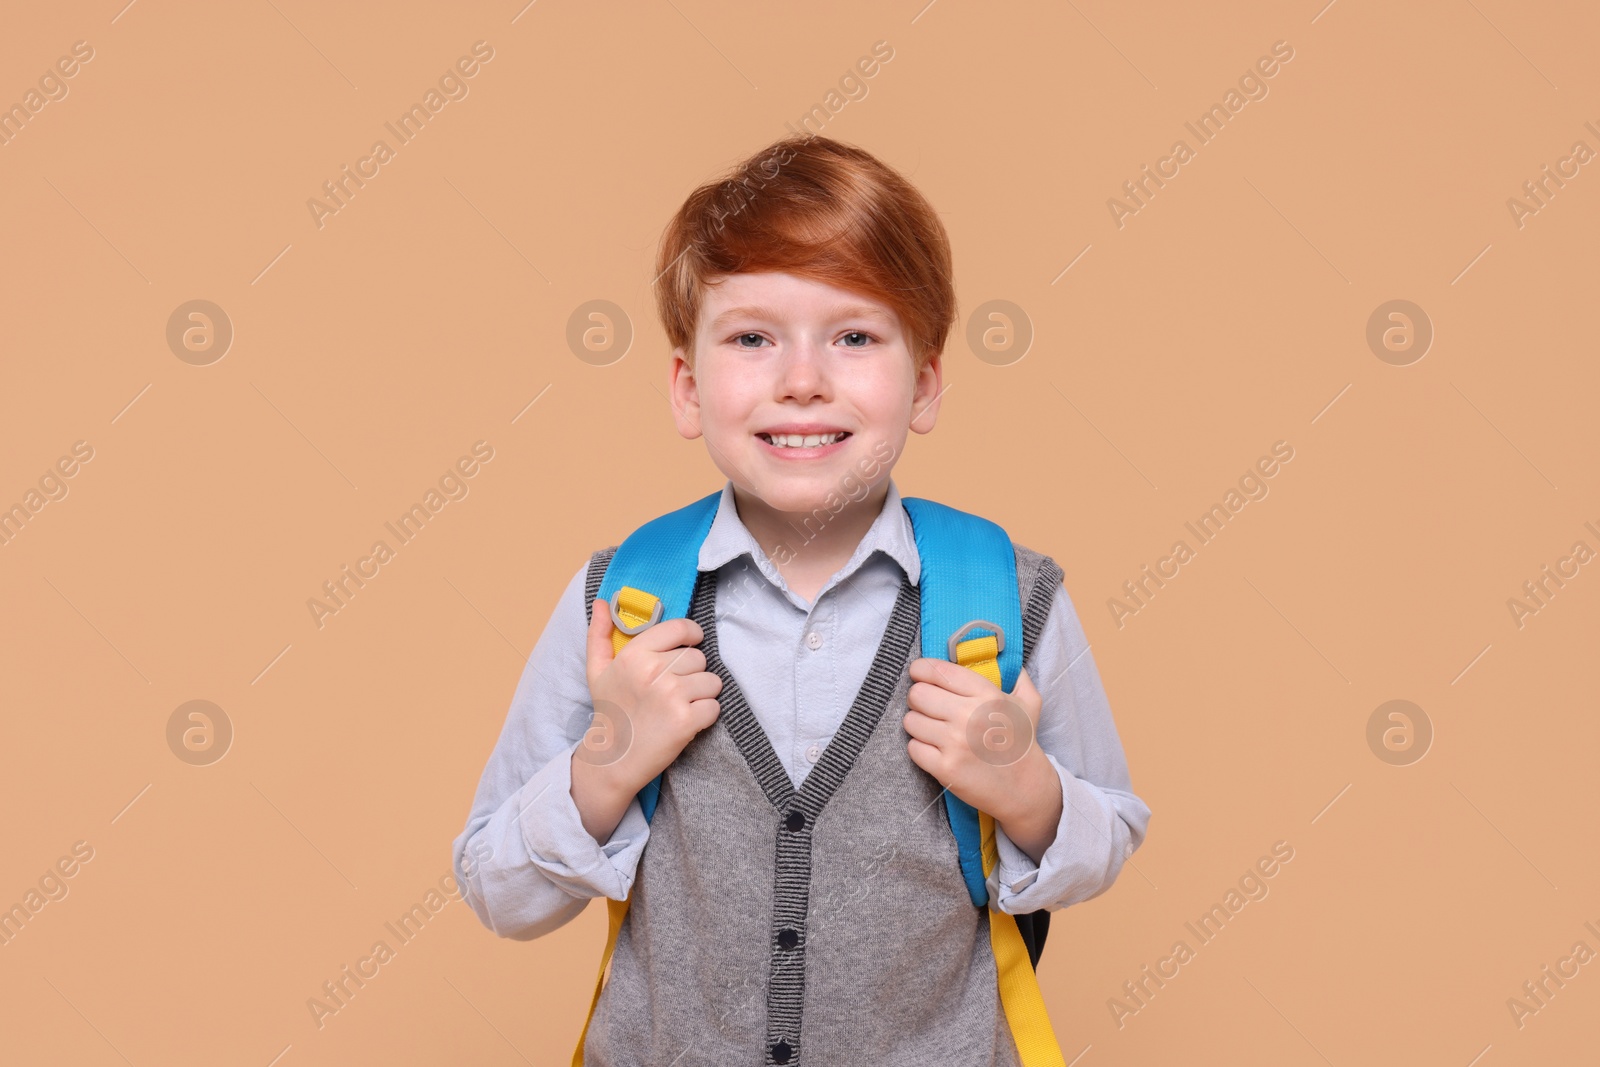 Photo of Portrait of smiling schoolboy on beige background